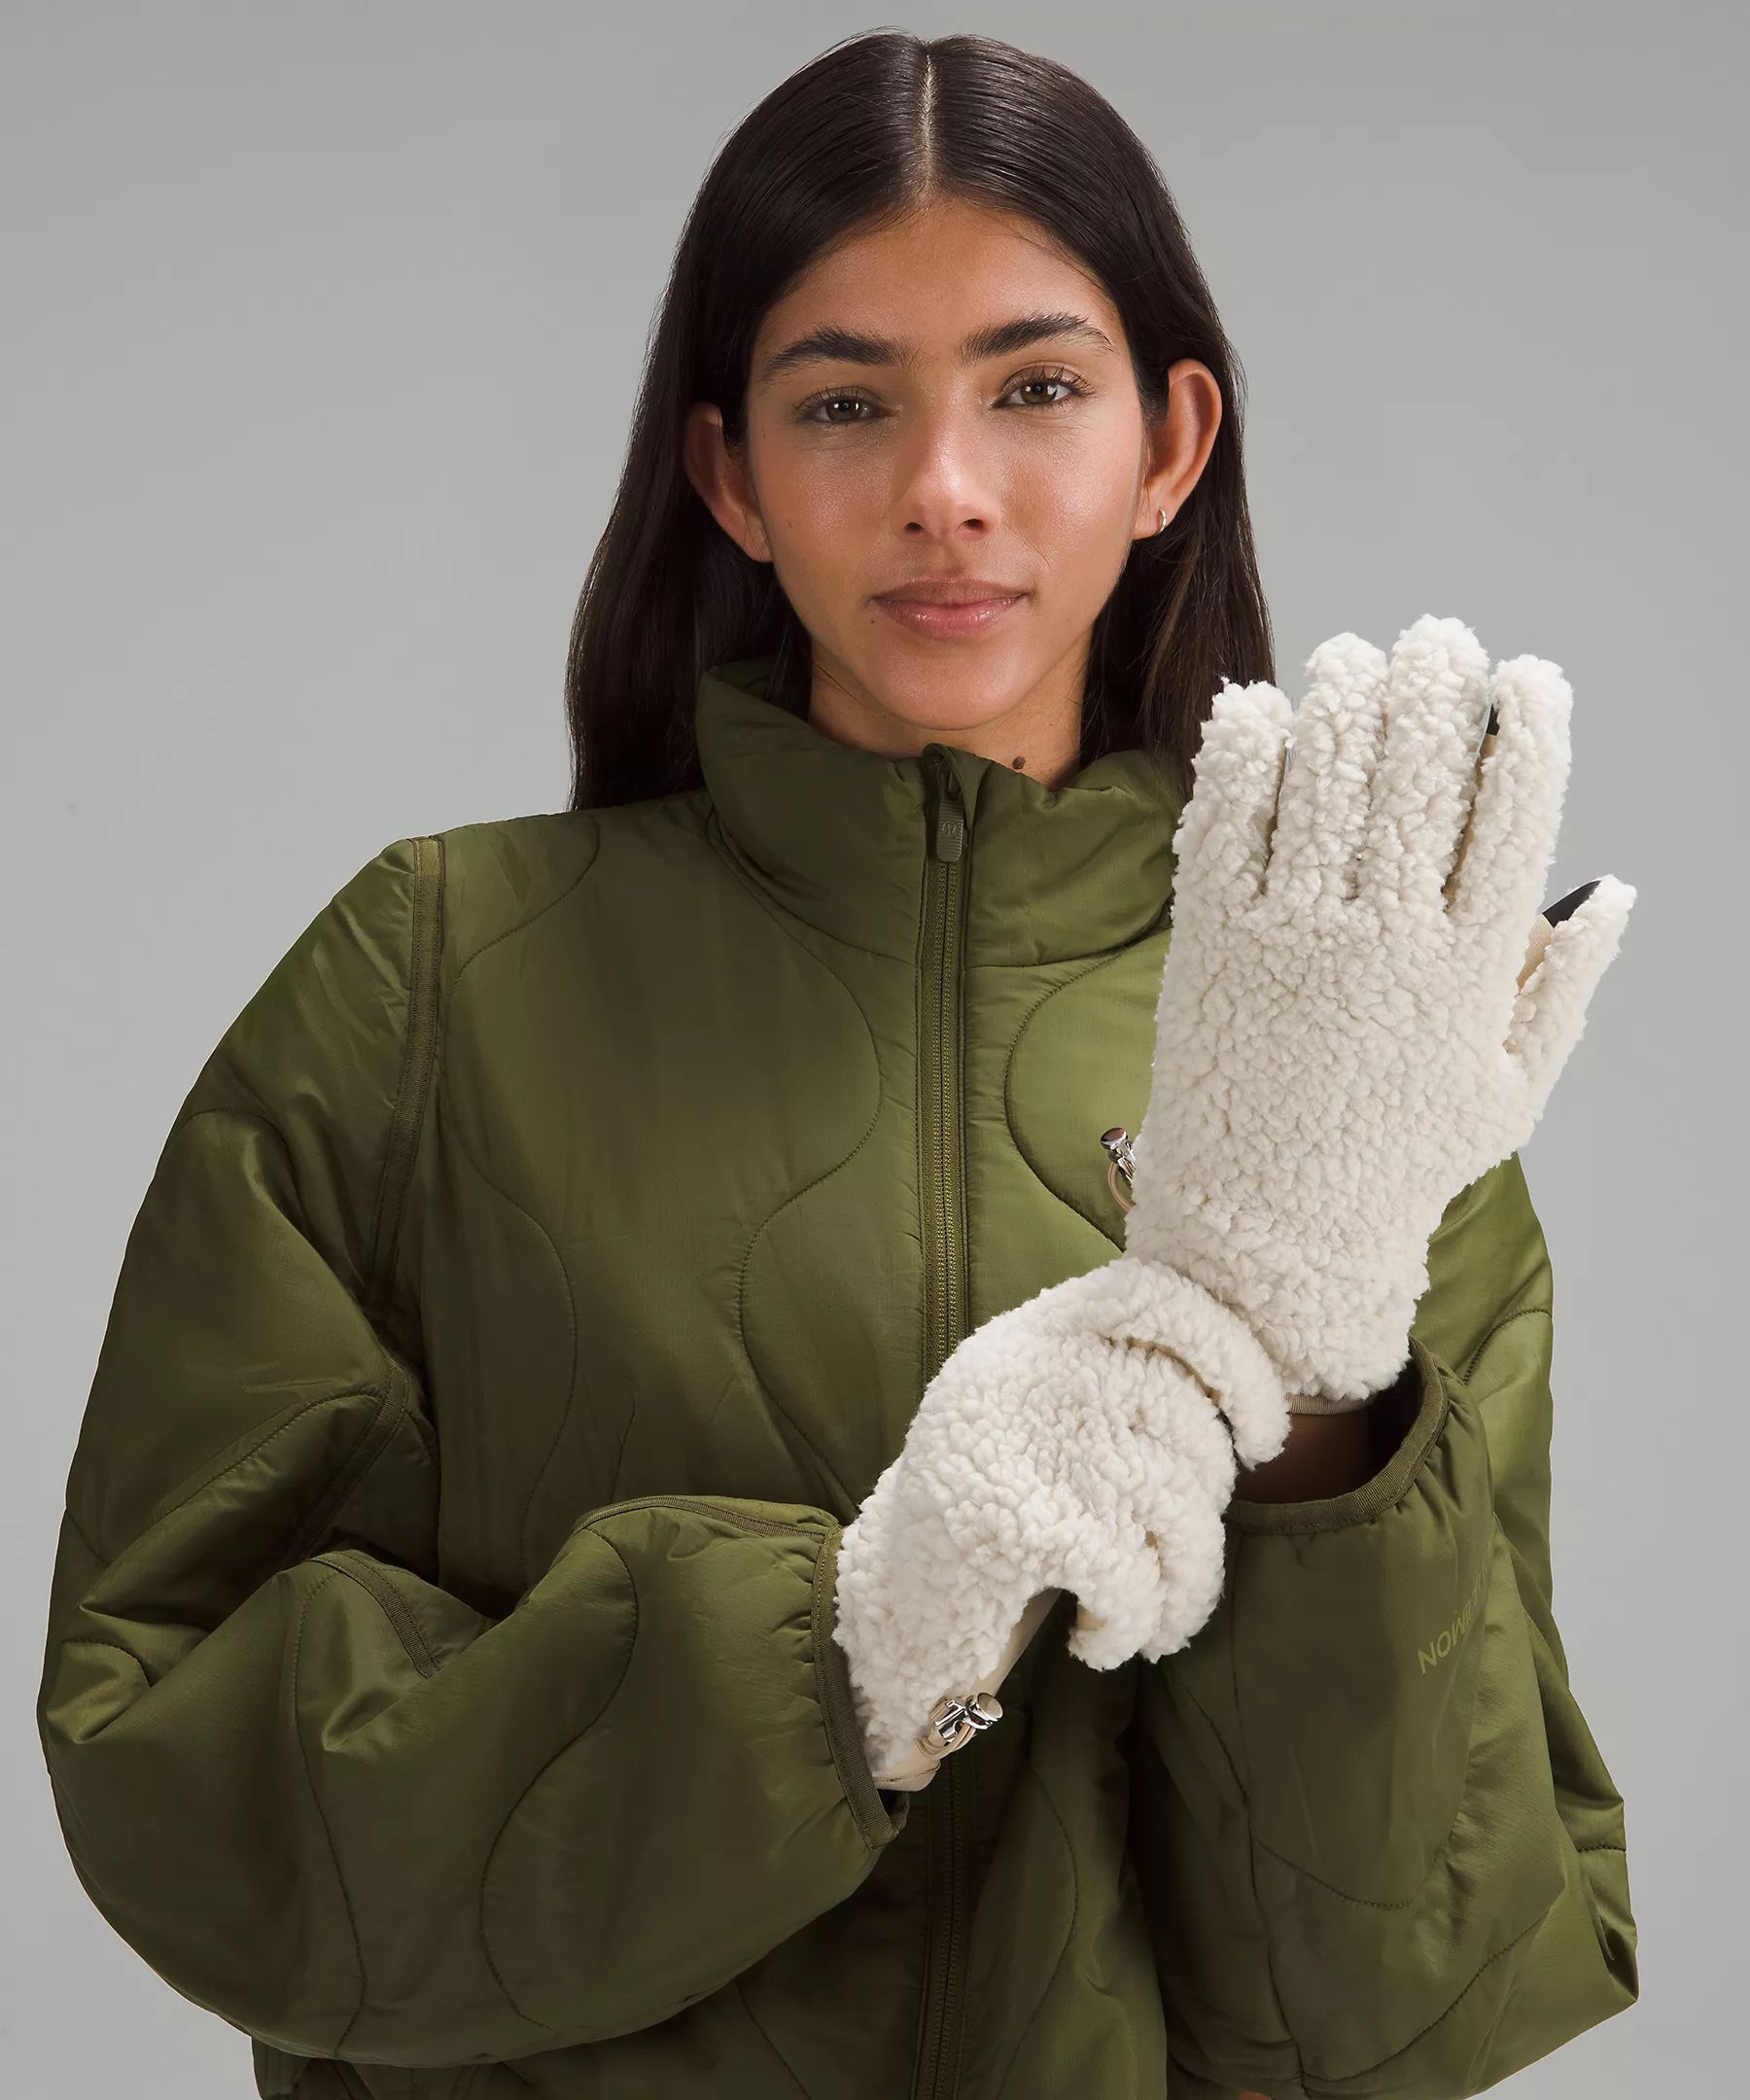 Women's Textured Fleece Gloves | Women's Gloves & Mittens & Cold Weather Acessories | lululemon | Lululemon (US)